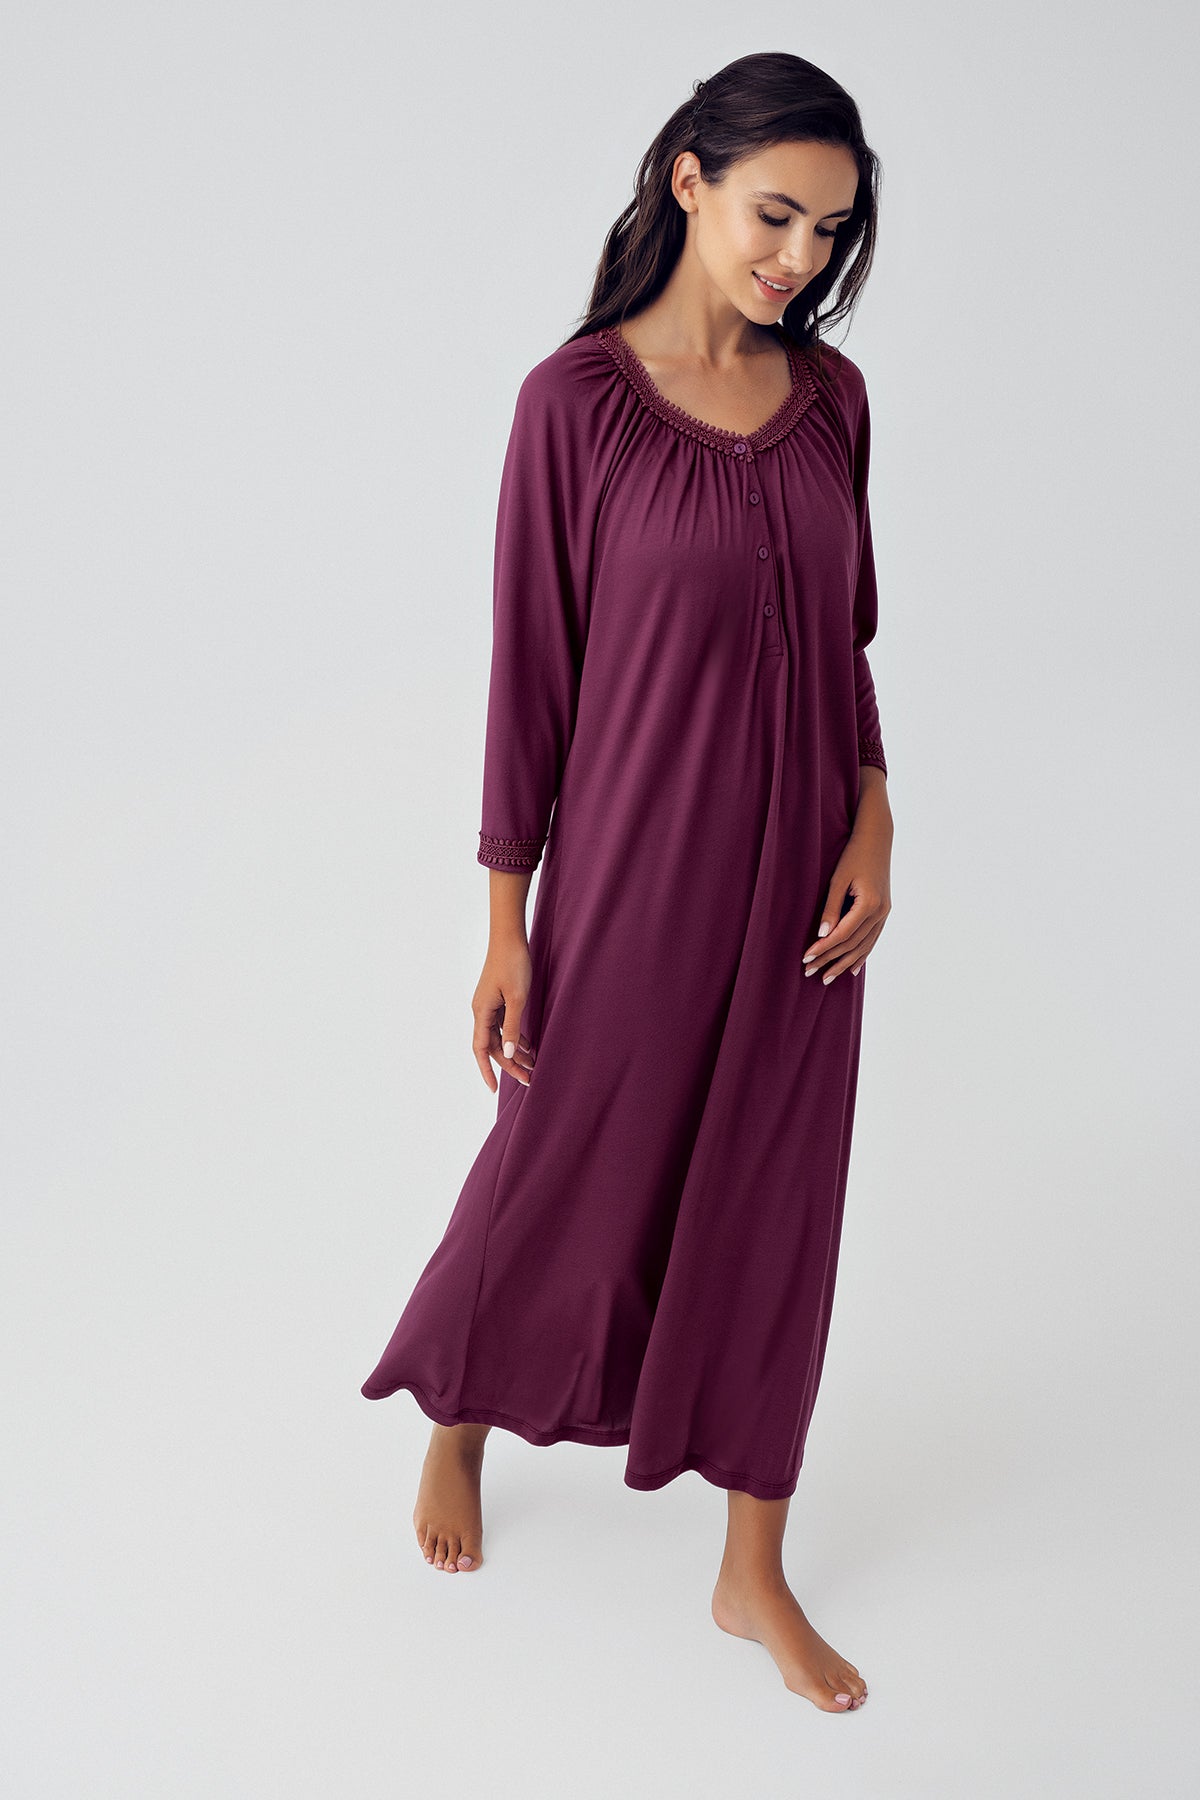 Shopymommy 15119 Square Collar Plus Size Maternity & Nursing Nightgown Plum